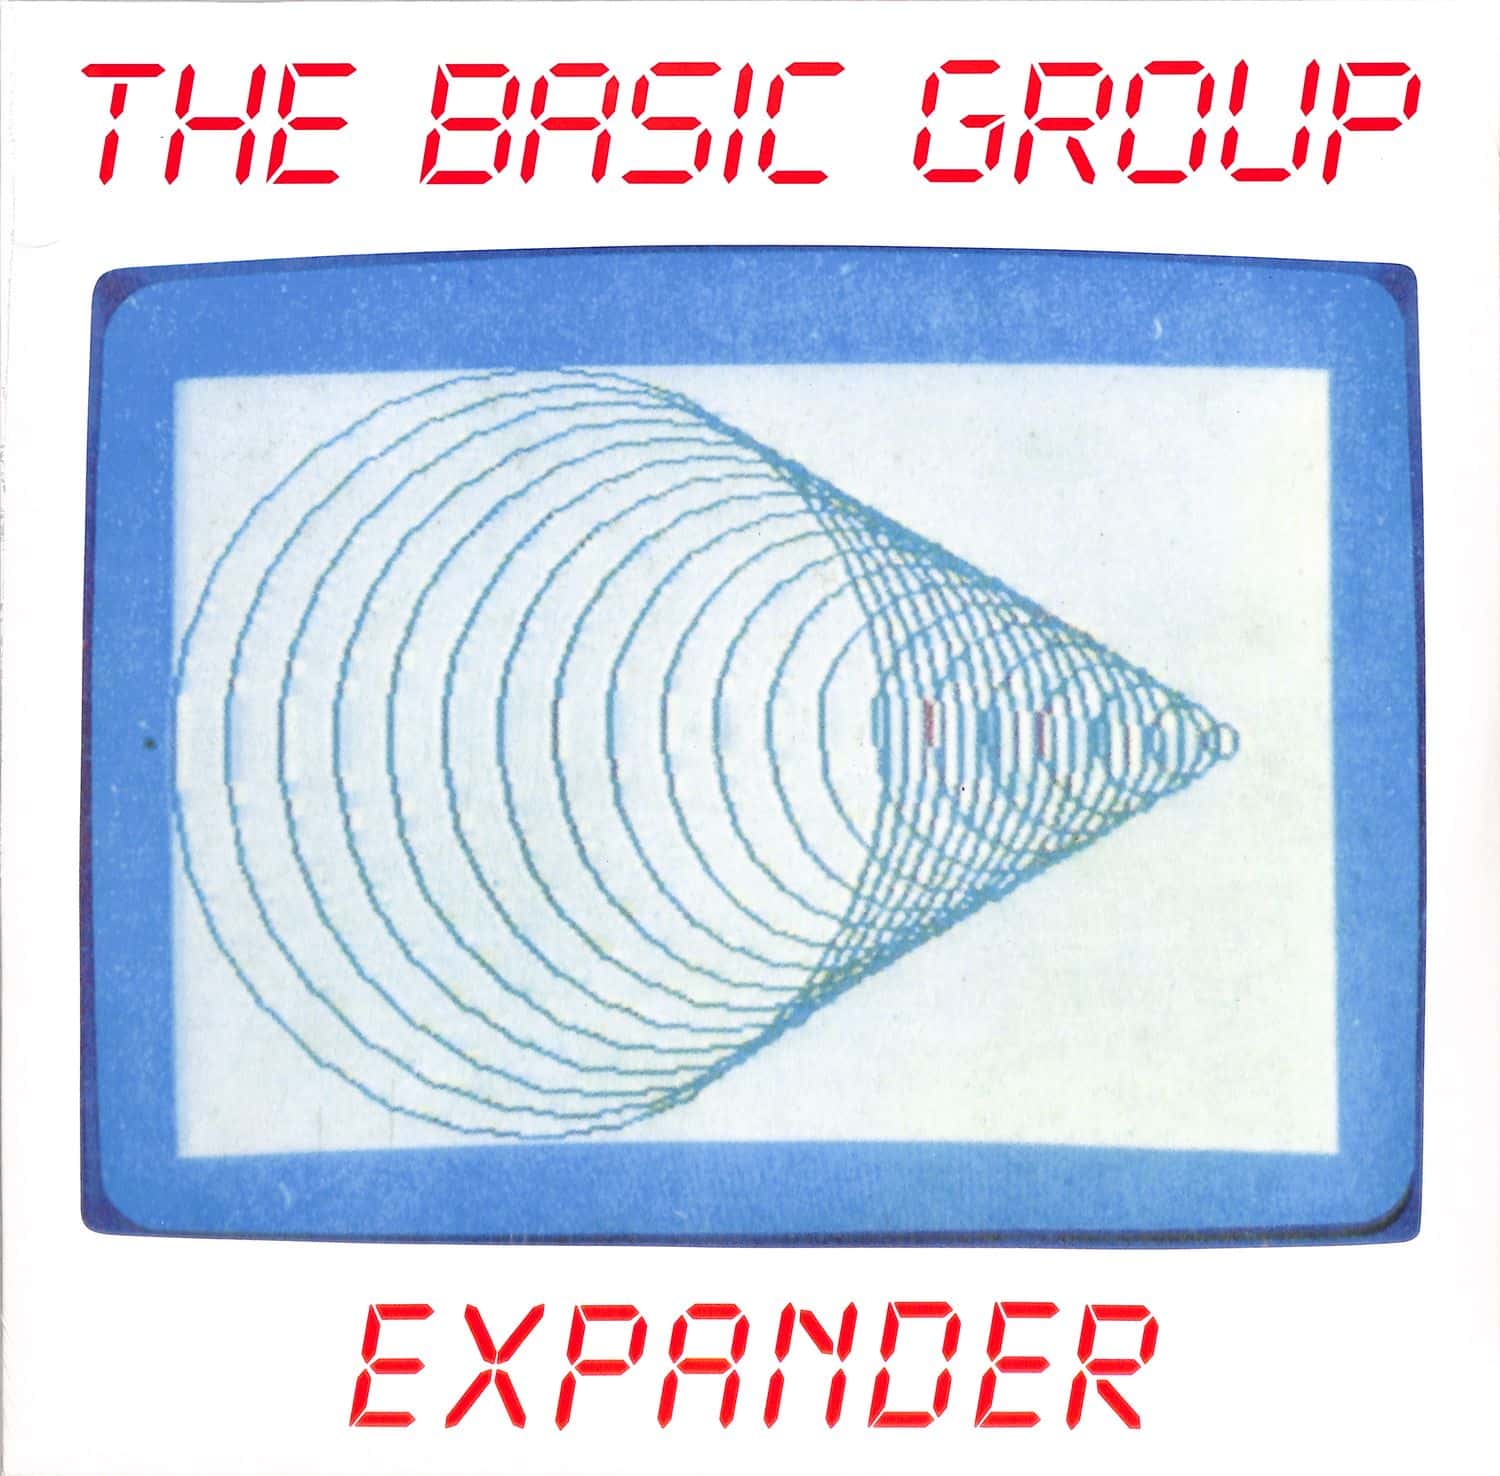 The Basic Group - EXPANDER LP